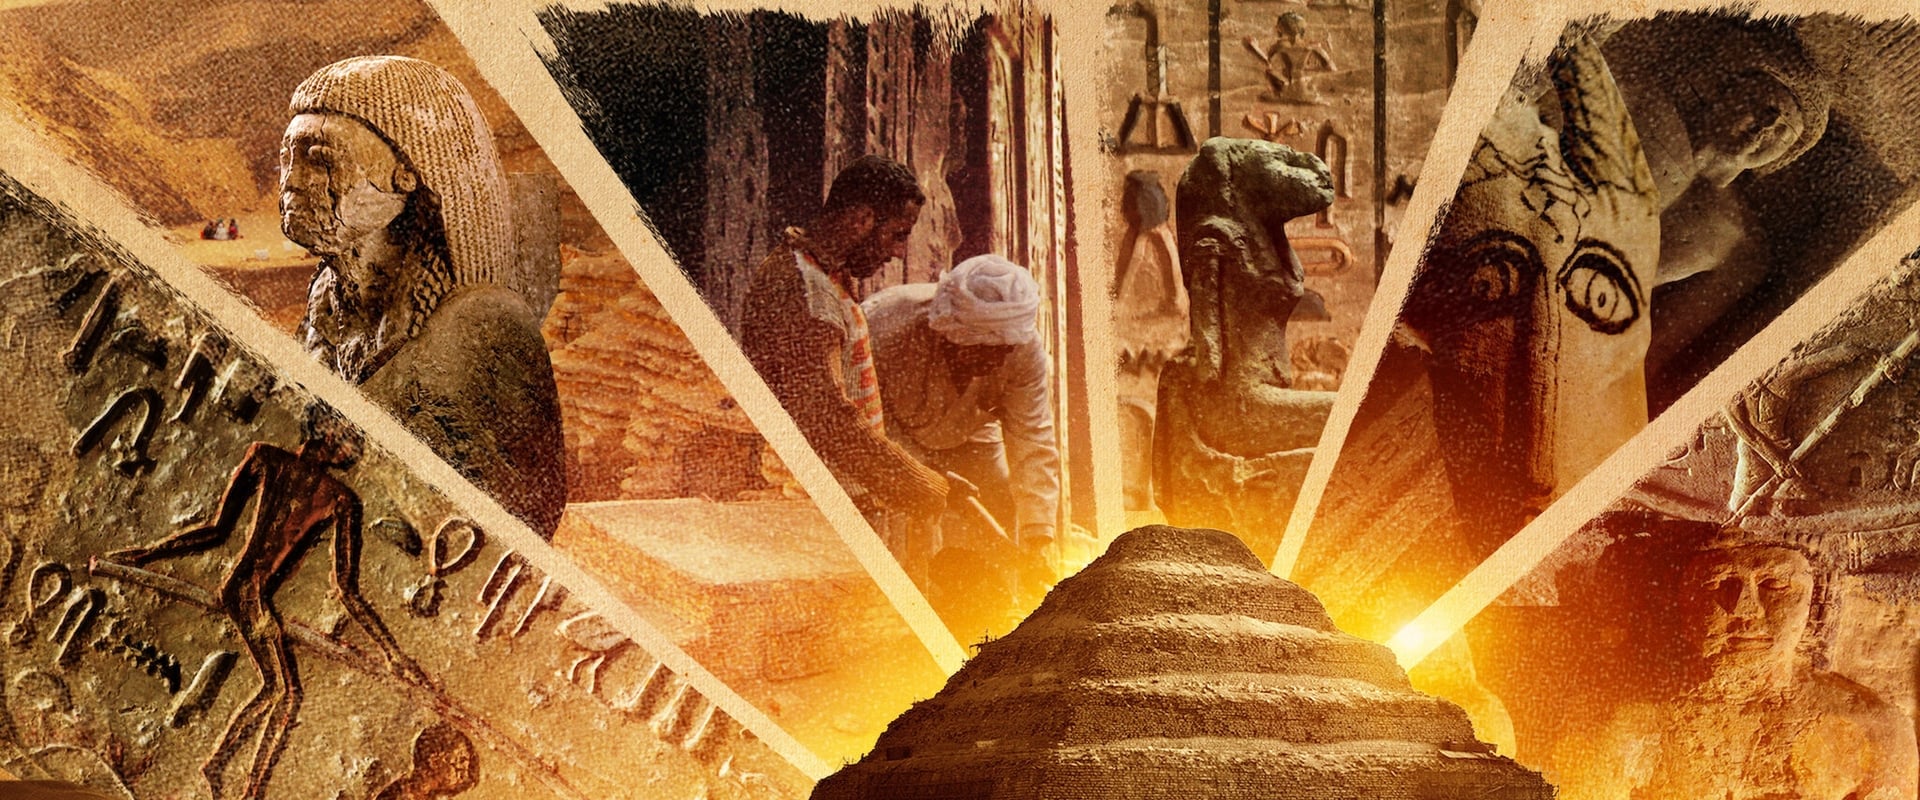 Los secretos de la tumba de Saqqara